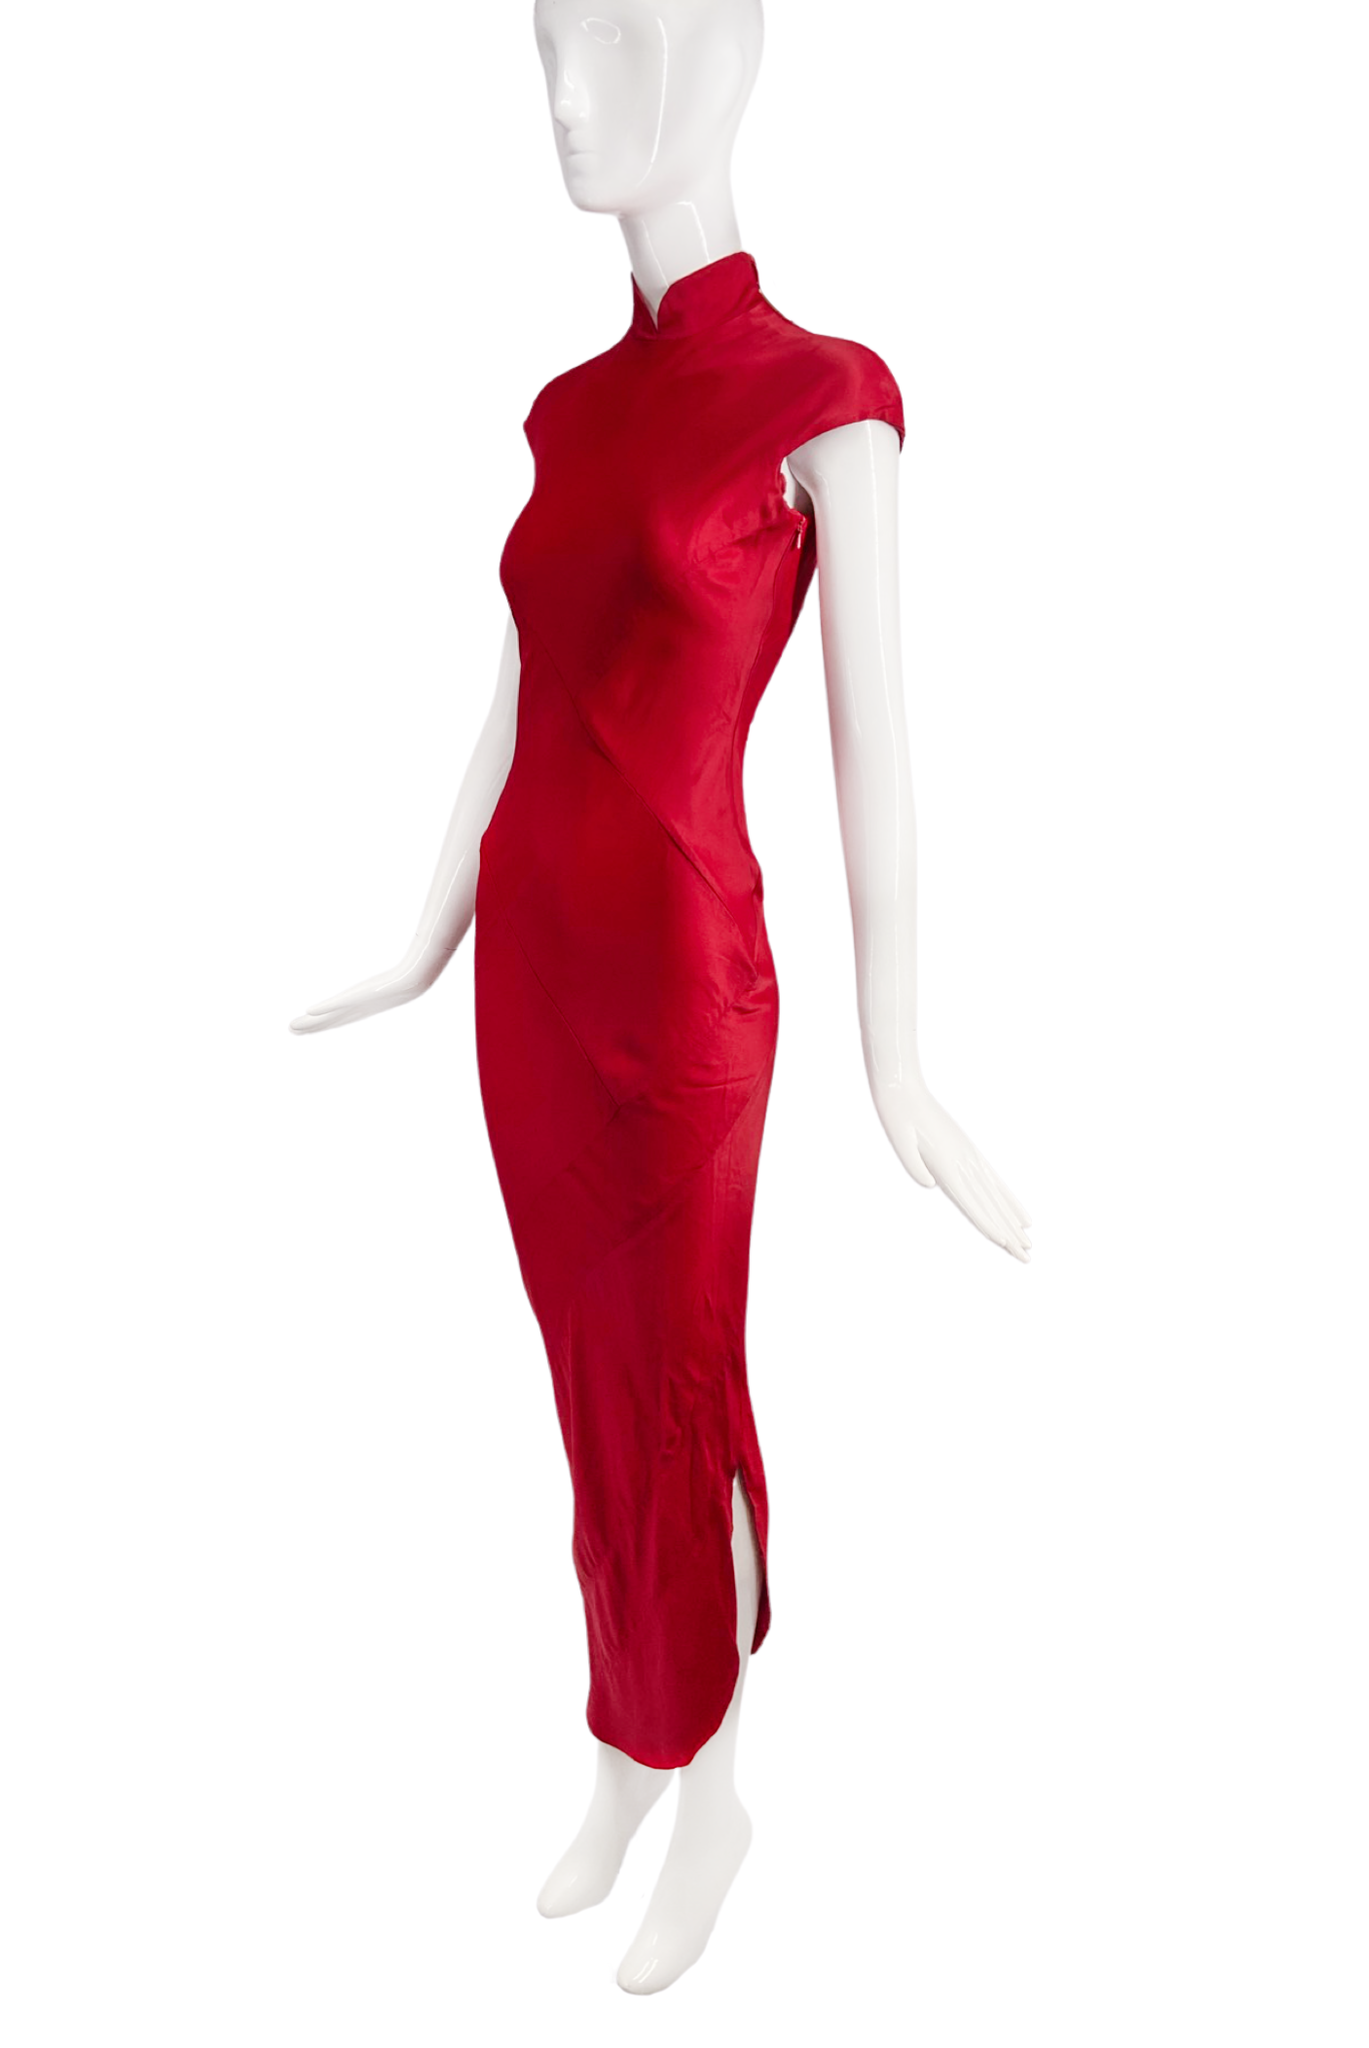 Kylie Jenner wears Maison Margiela Artisanal designed by John Galliano at  the Vanity Fair Oscar Party - ZEITBLATT Magazin